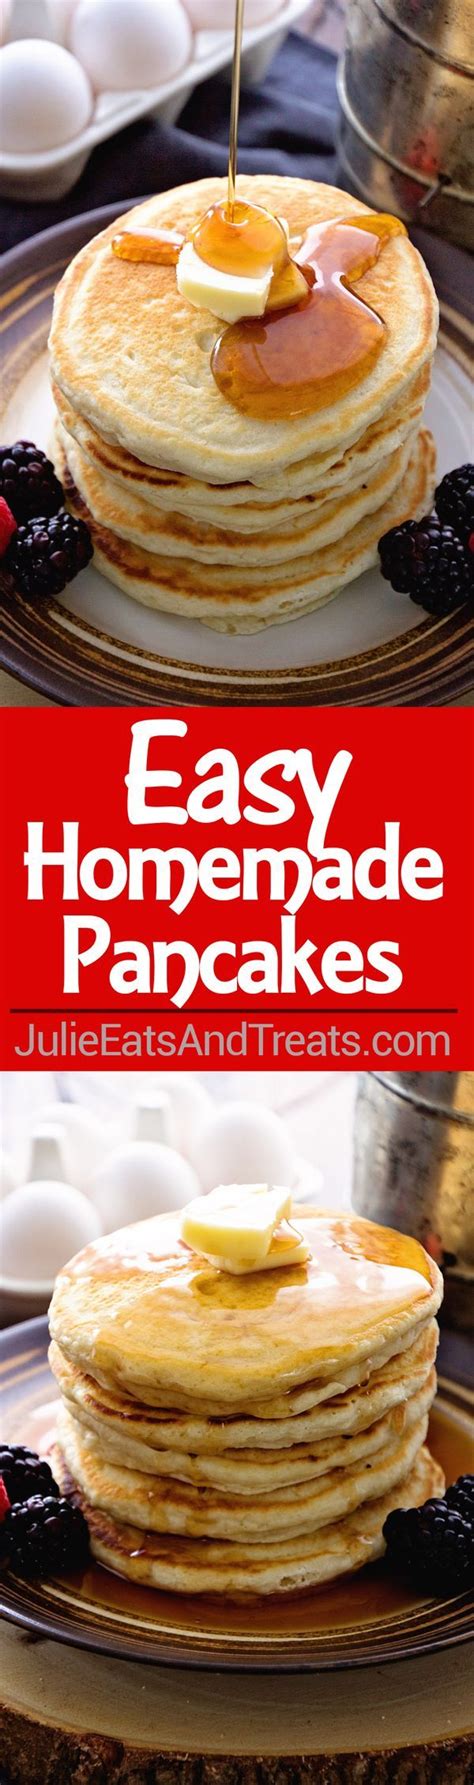 Easy Homemade Pancakes Recipe Julies Eats And Treats Easy Homemade